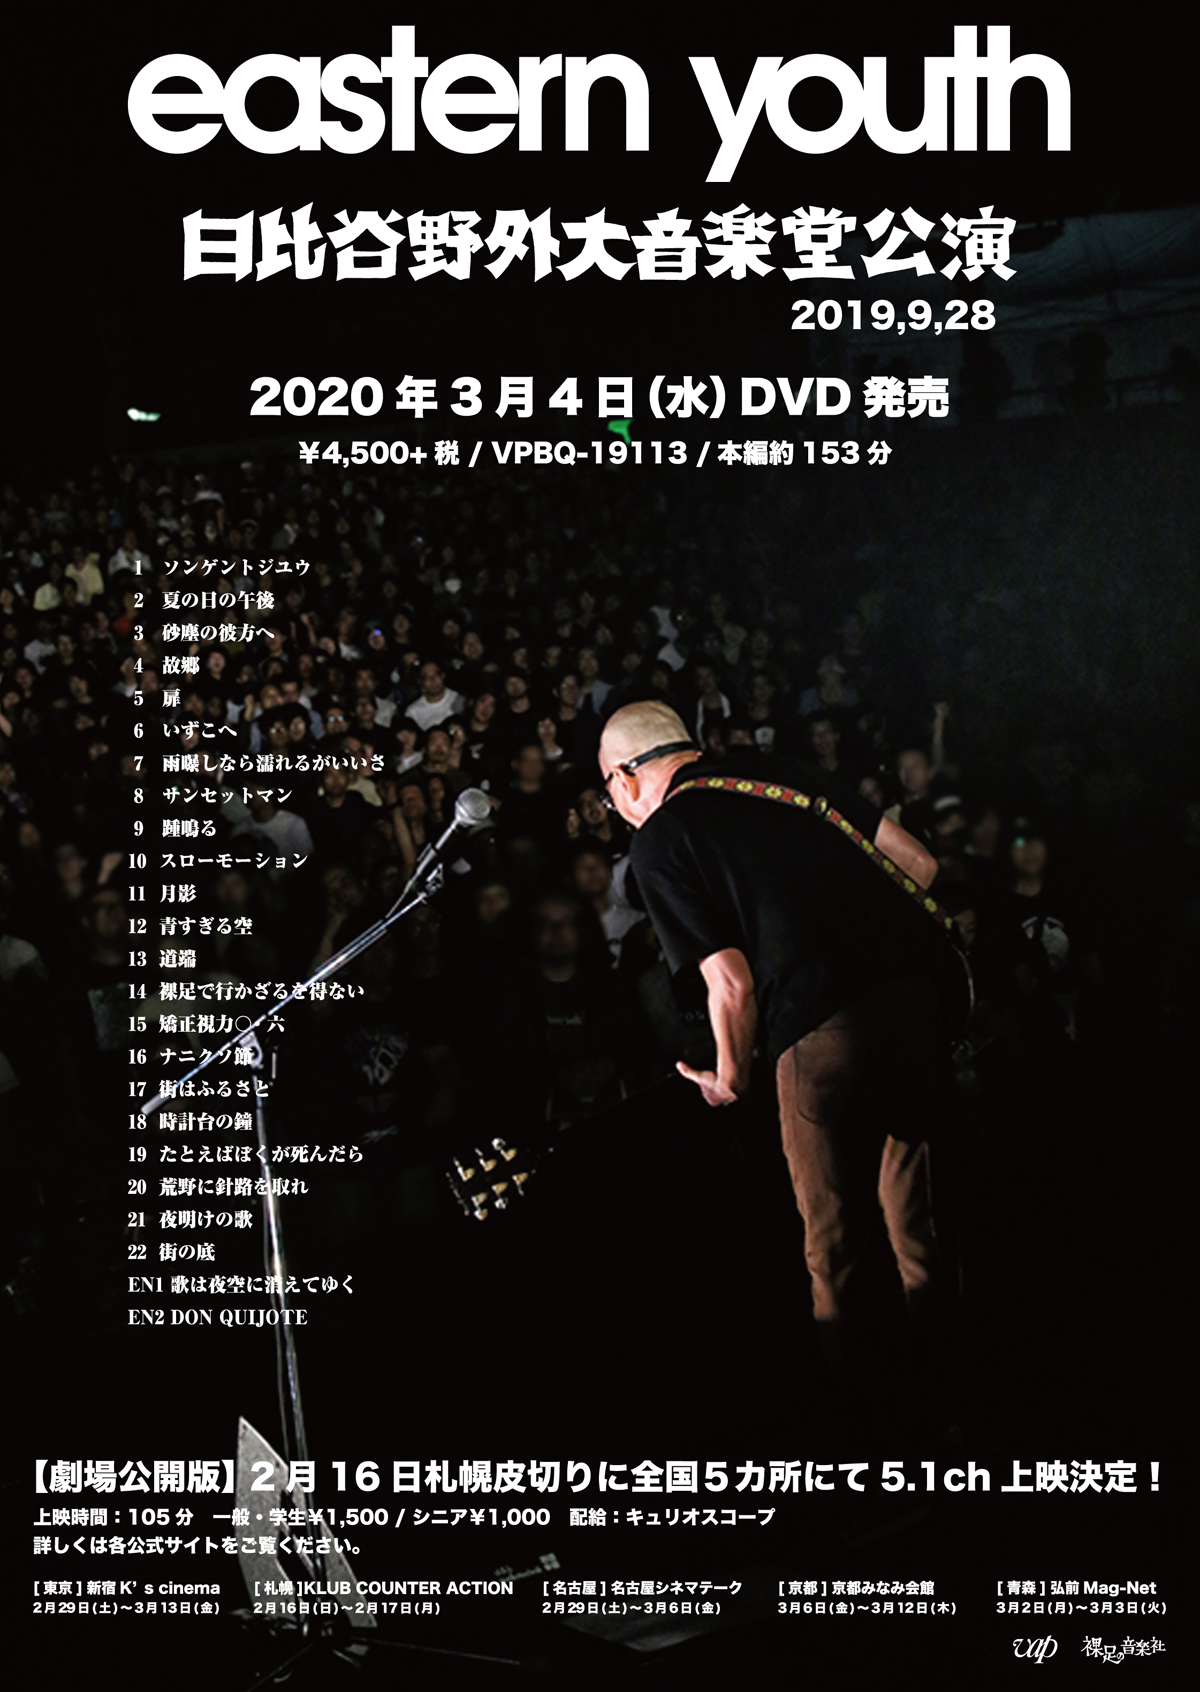 劇場公開版『eastern youth日比谷野外大音楽堂公演2019.9.28』の画像